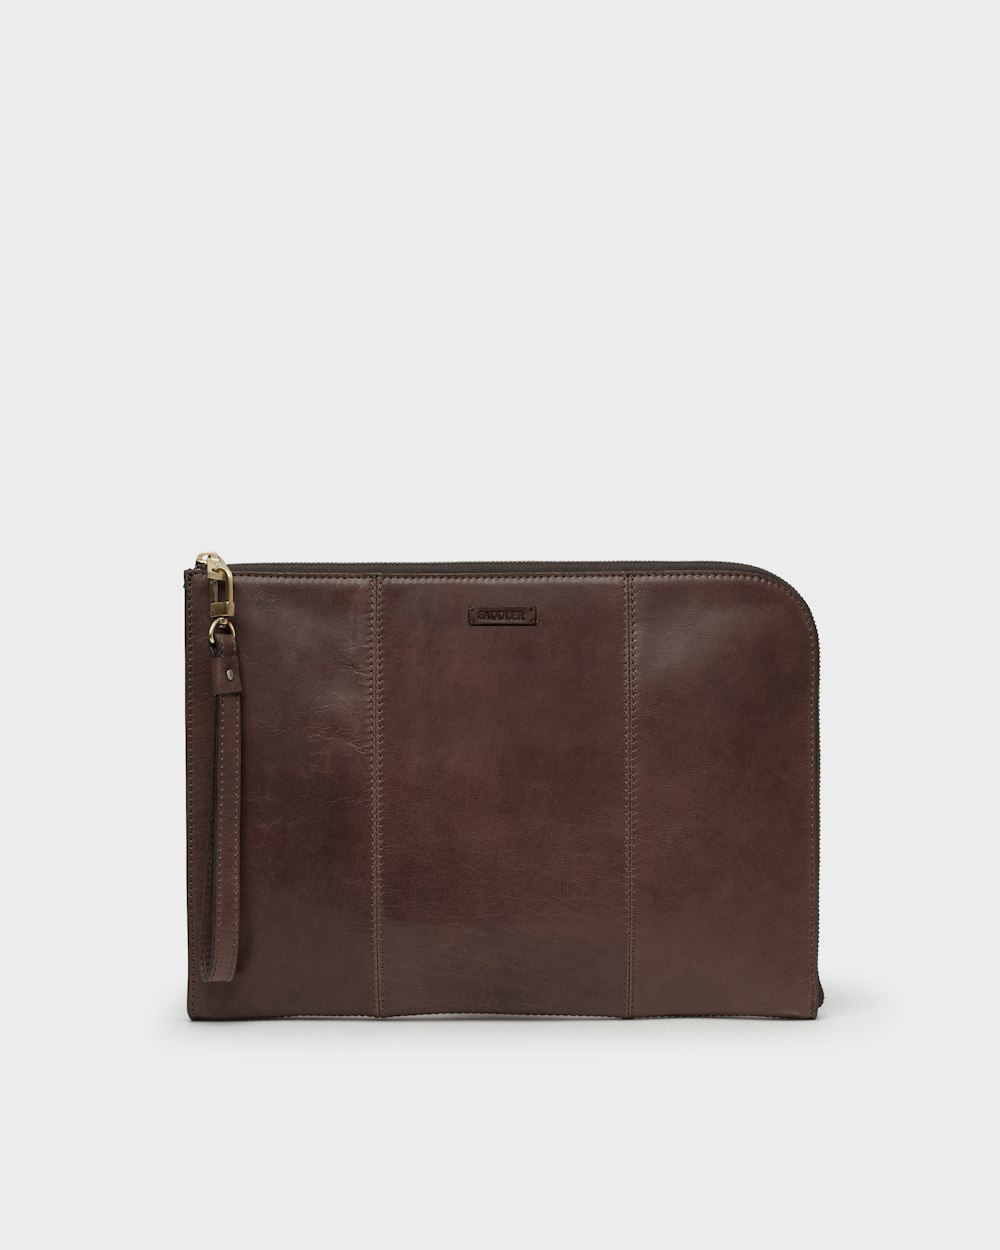 Buy Pedro computer bag at  - The swedish leather brand